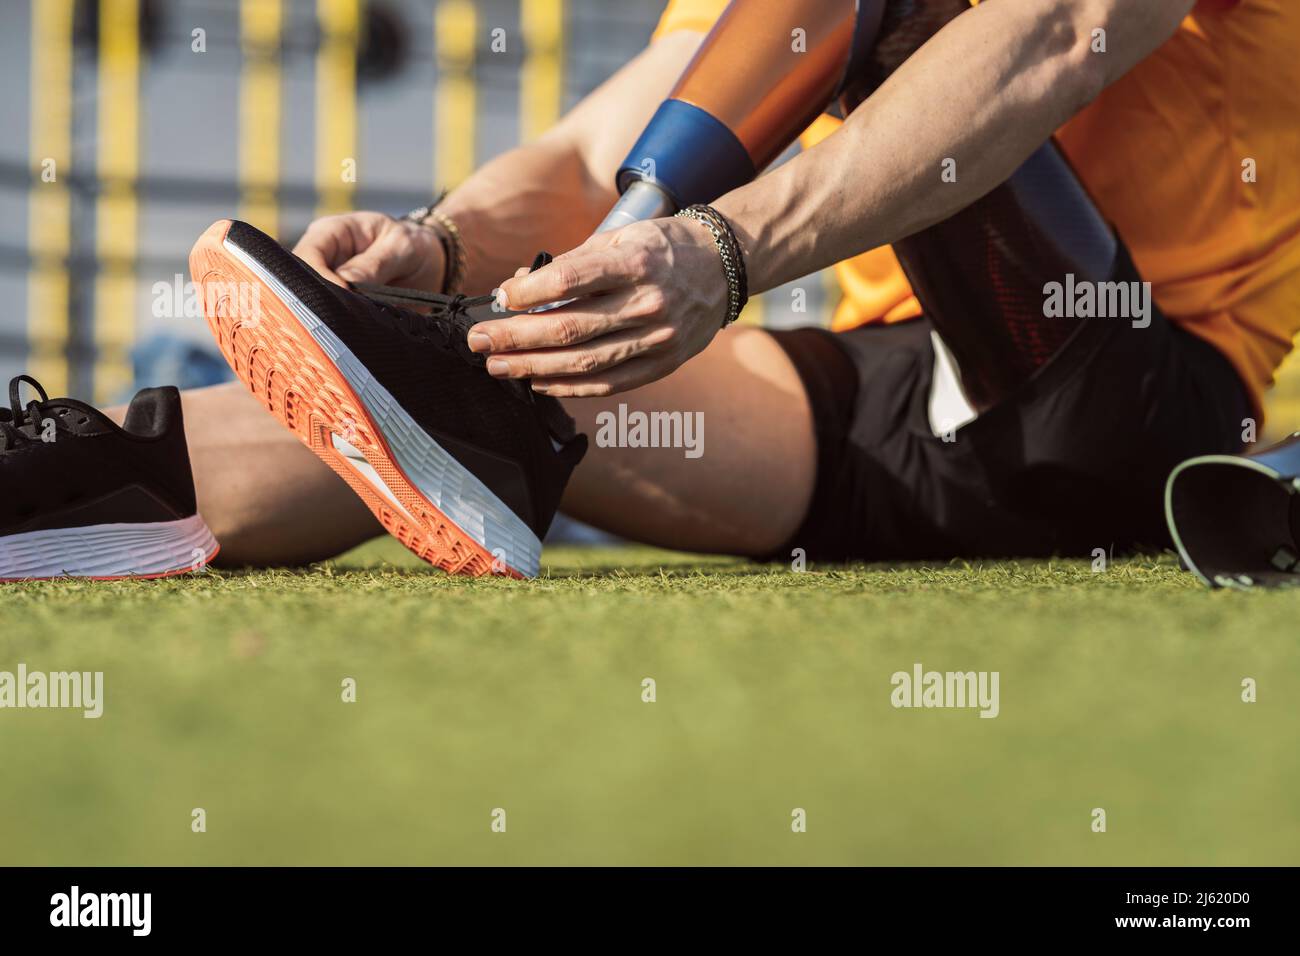 Hands of athlete tying shoelace of prosthetic leg sitting on grass Stock Photo